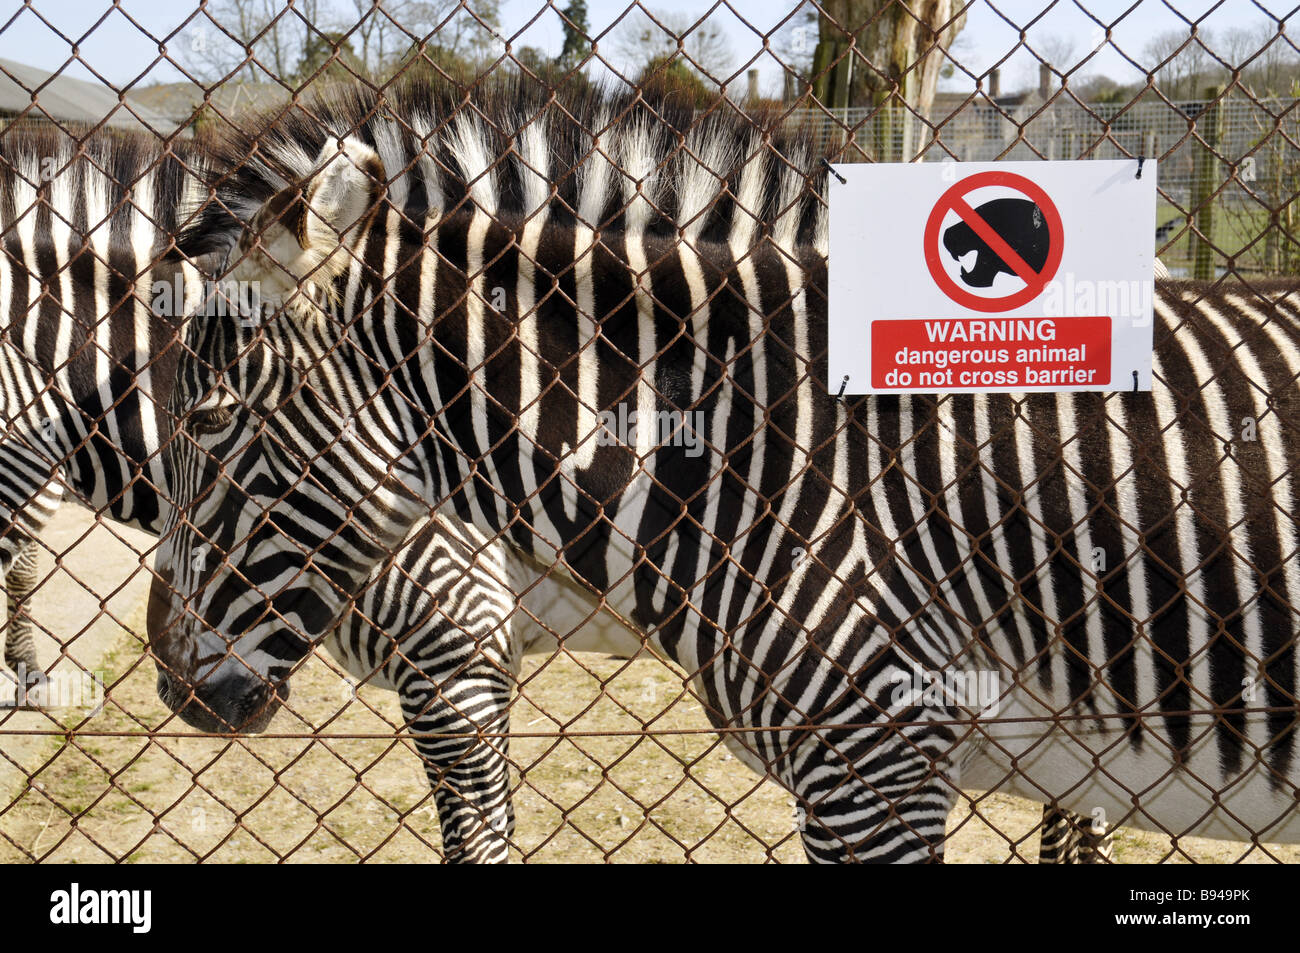 Zebra Zoo Captive Animal Cage Stock Photo